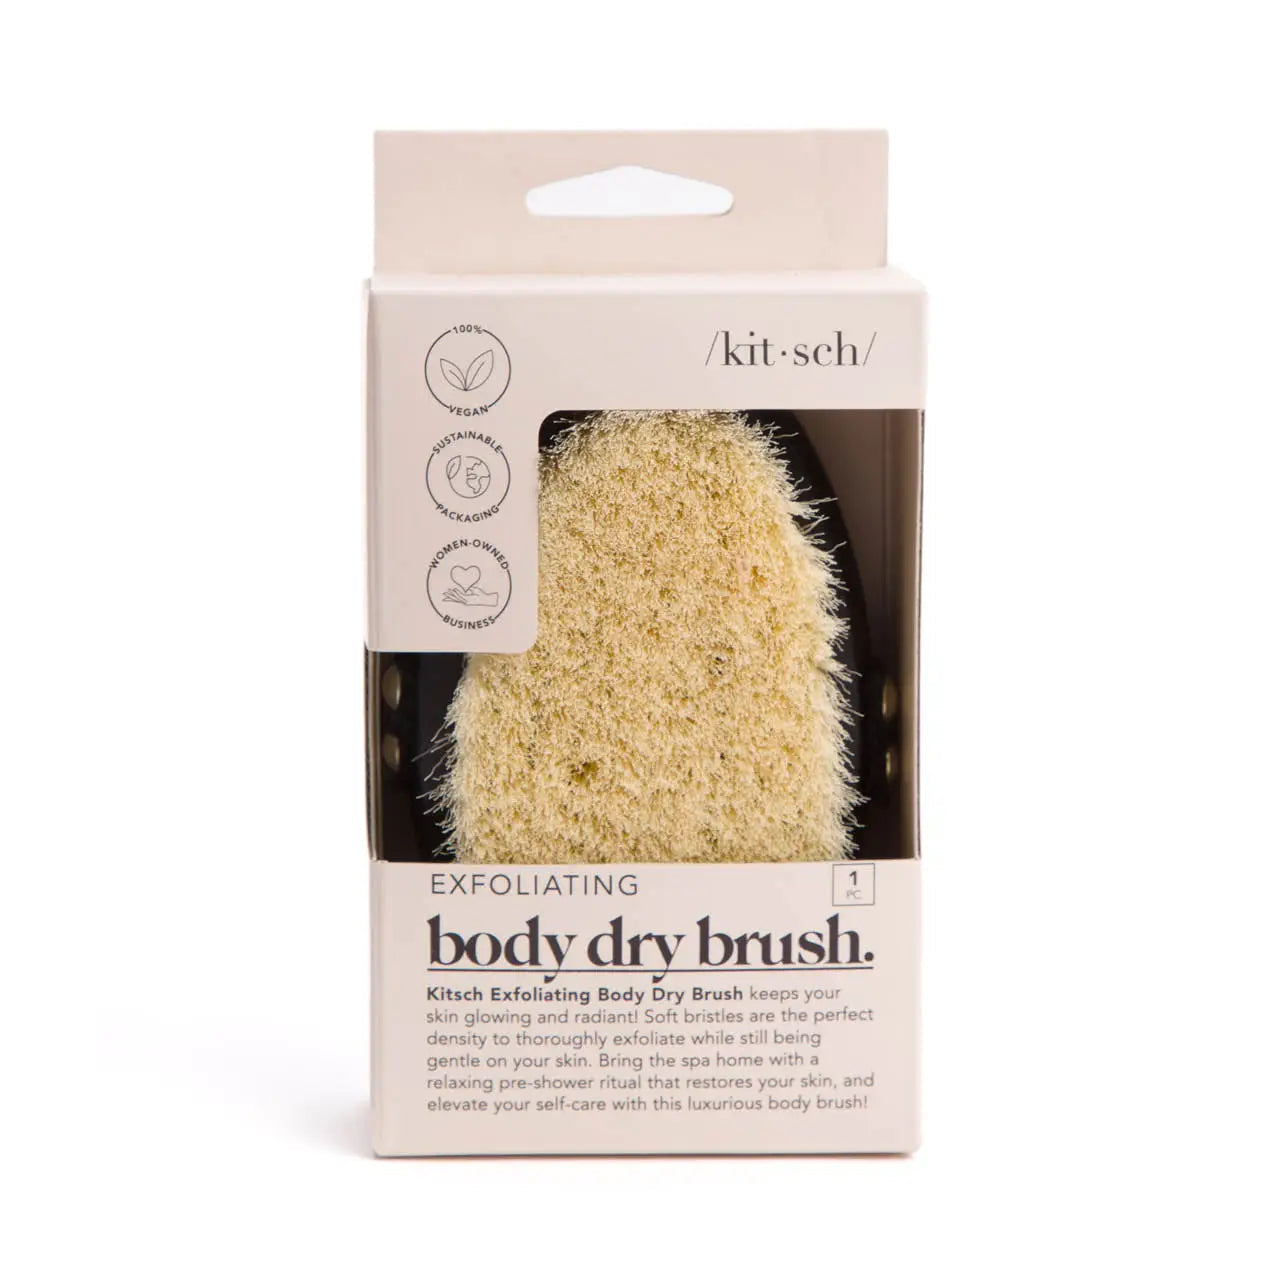 /kit-sch/ body dry brush